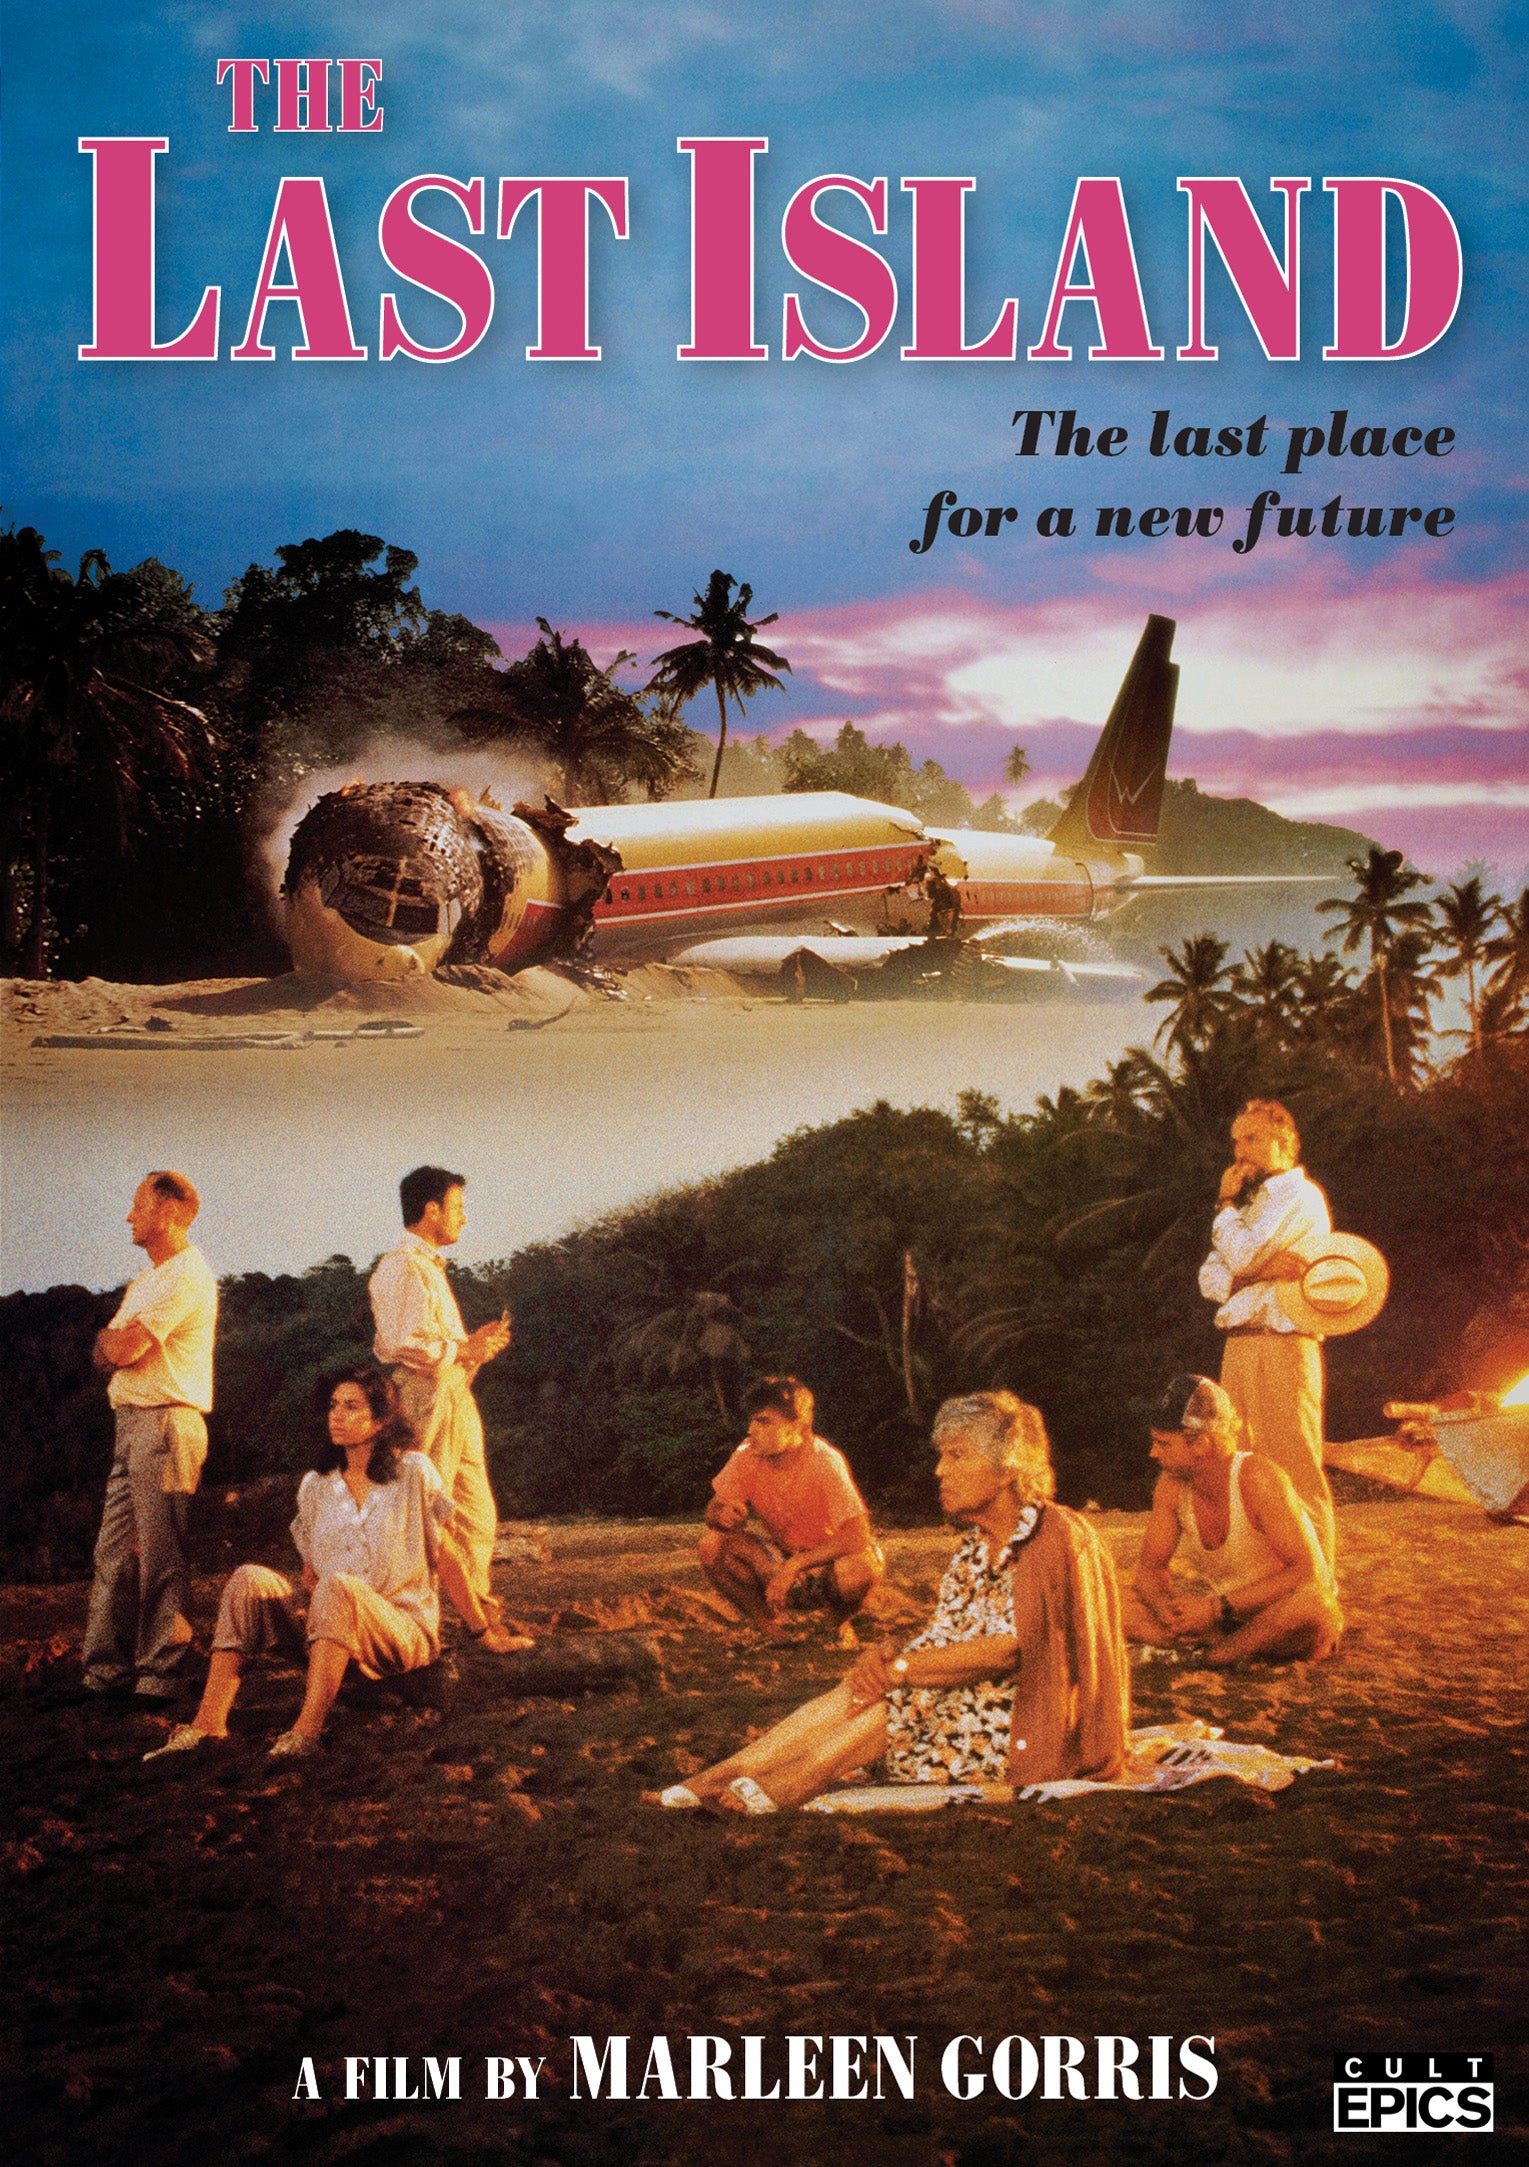 THE LAST ISLAND DVD